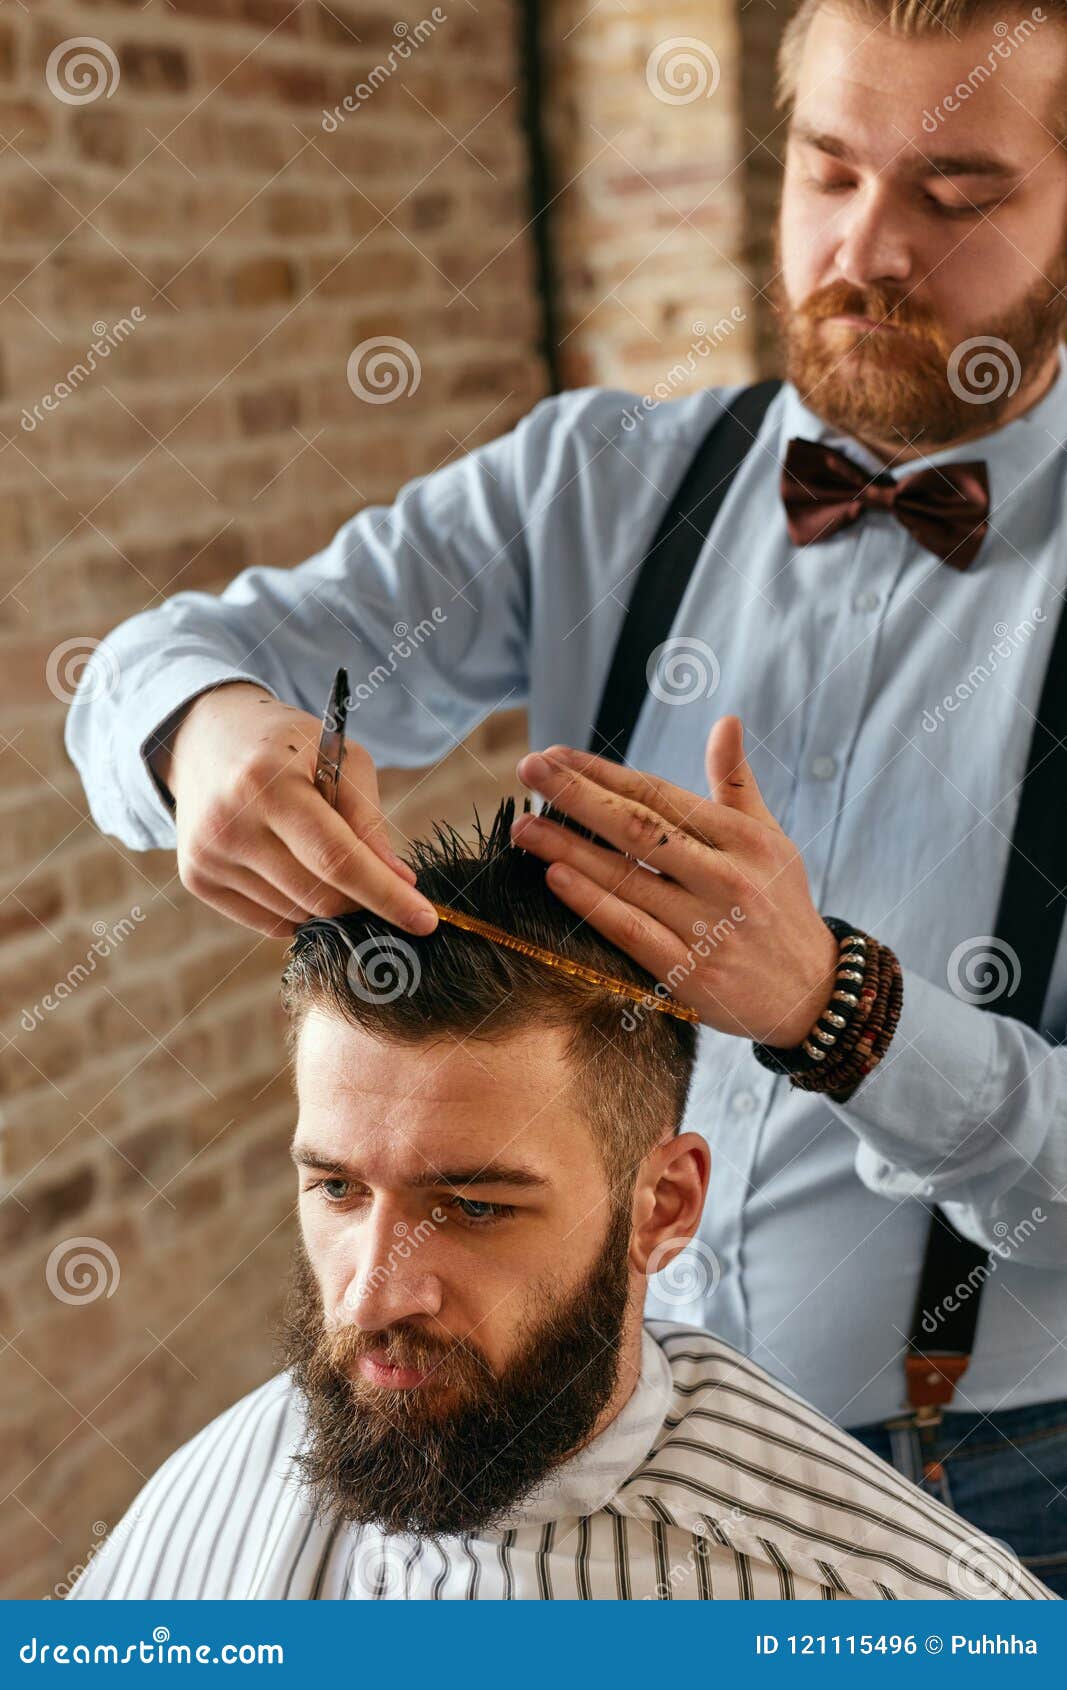 Men Hair Salon. Barber Doing Haircut in Barbershop Stock Photo - Image ...